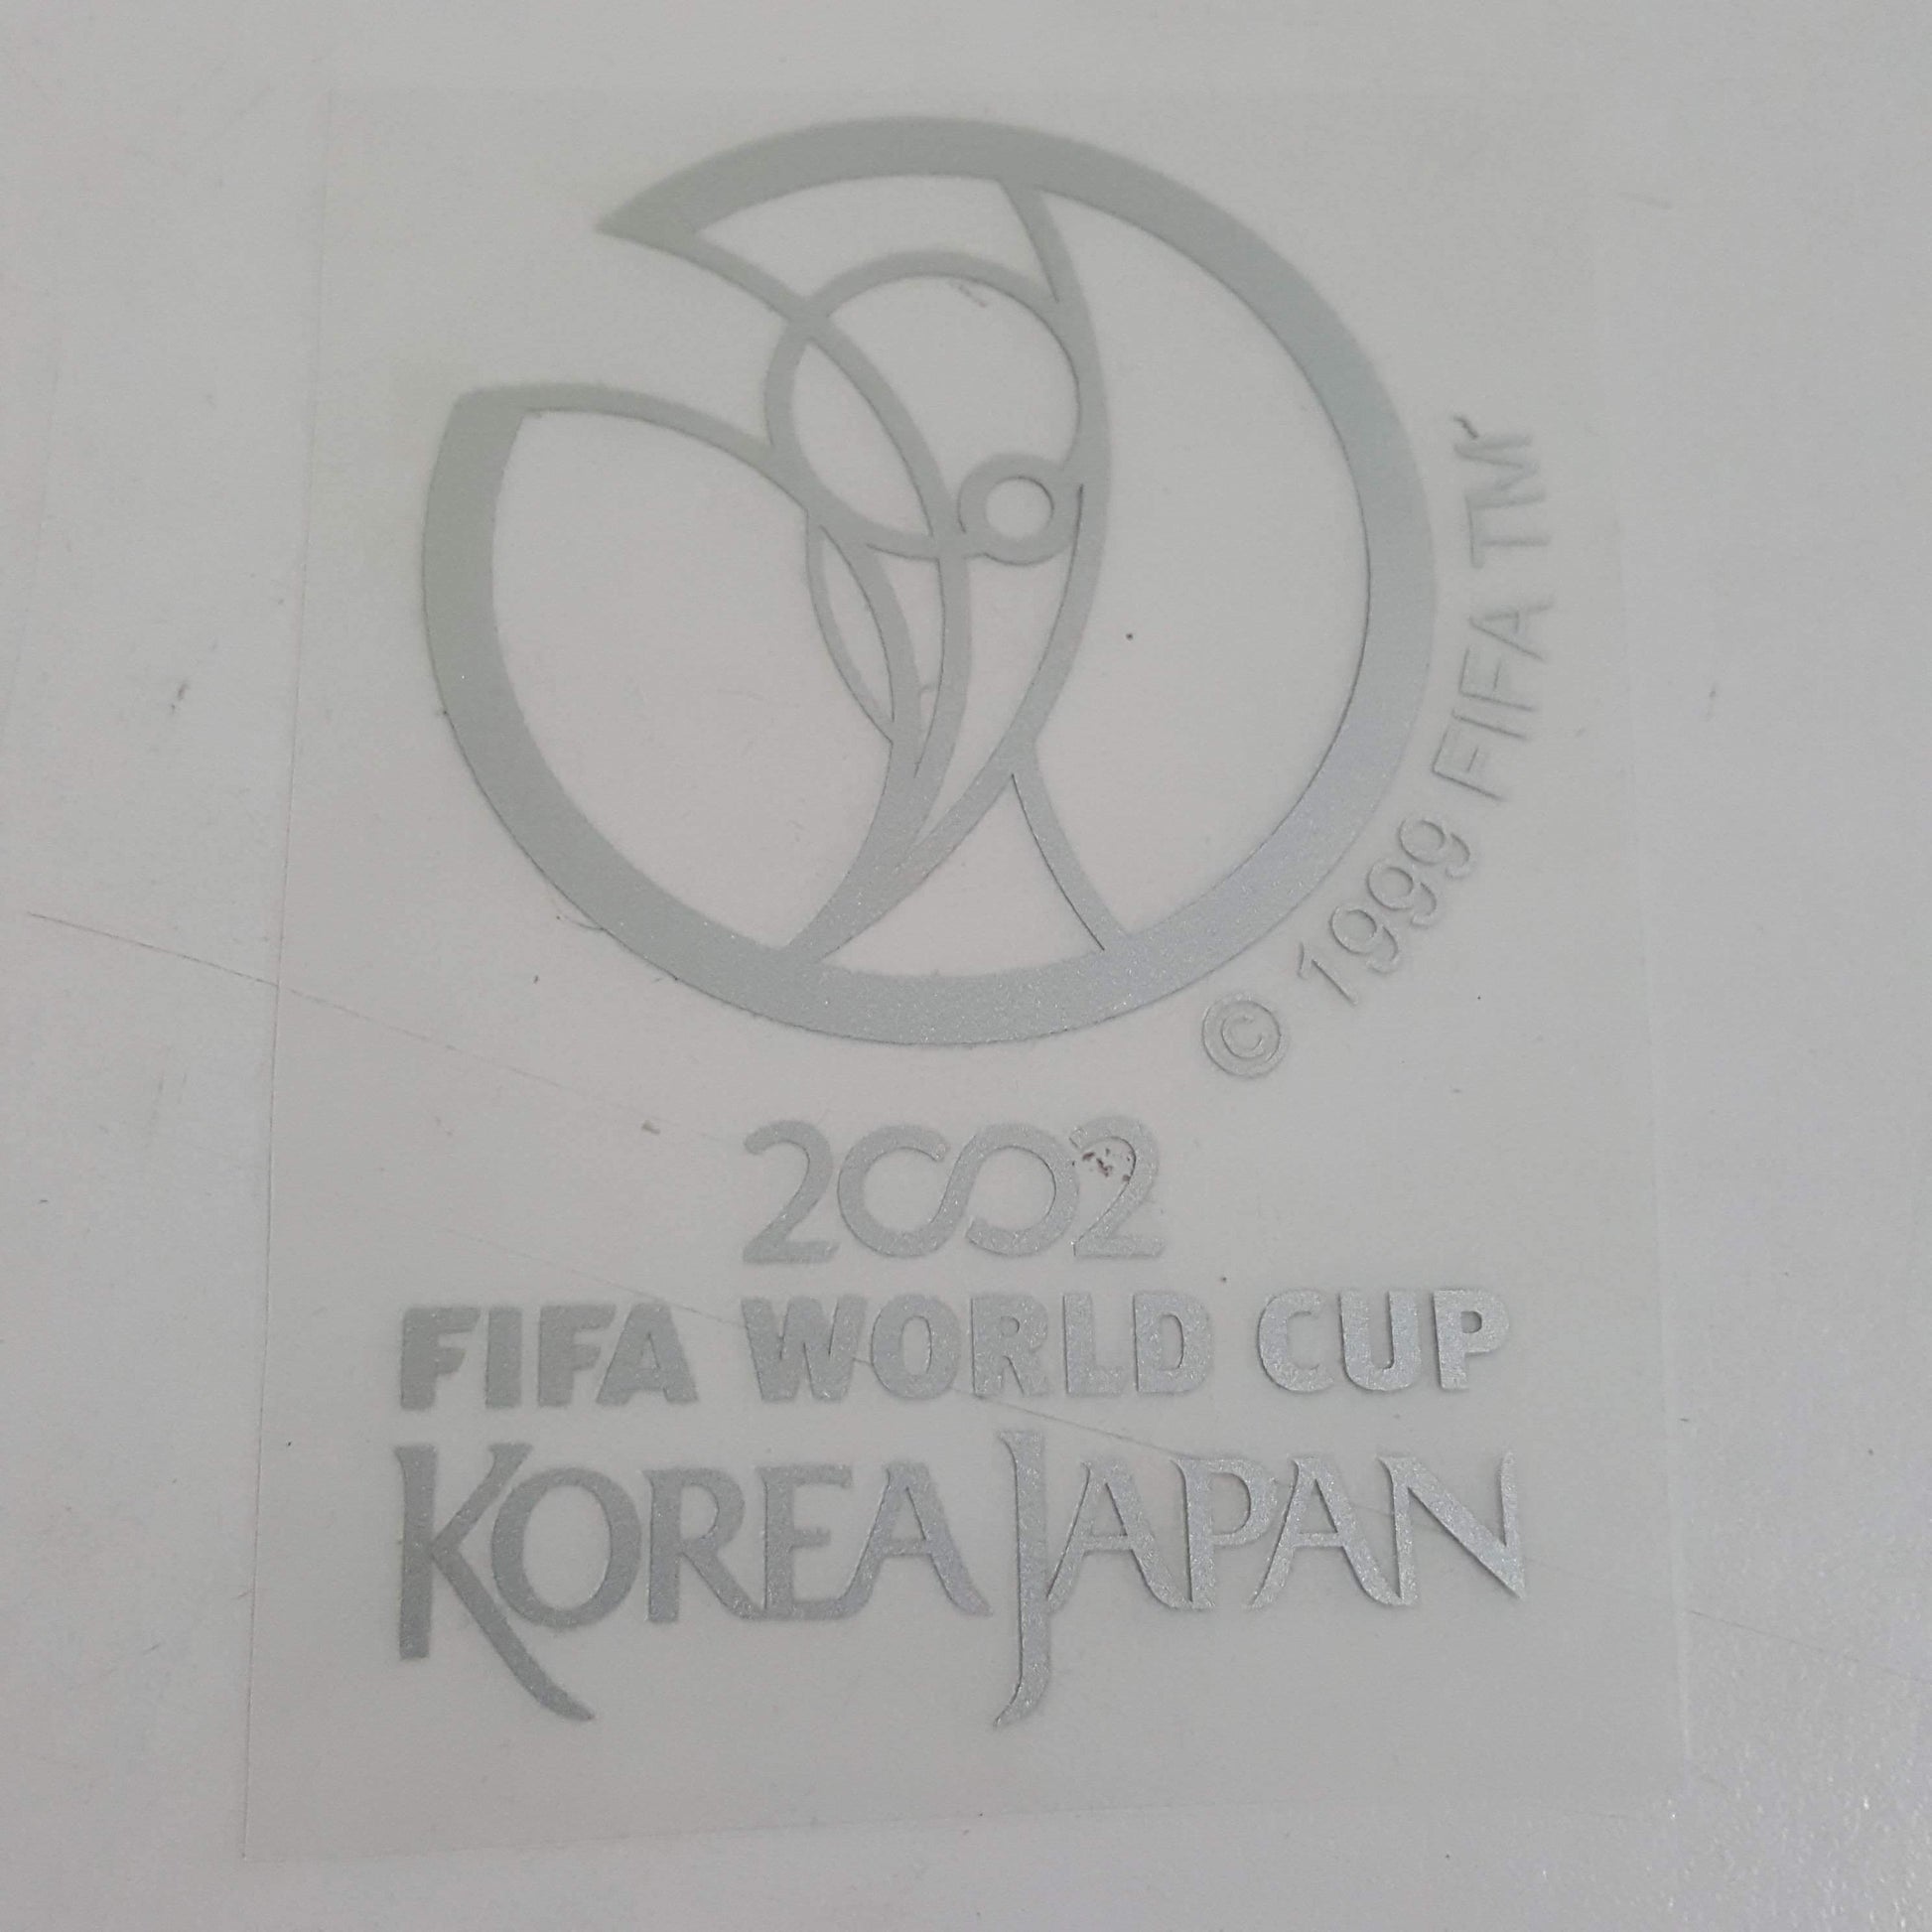 FIFA World Cup 2002 Korea Japan - ClassicFootballJersey